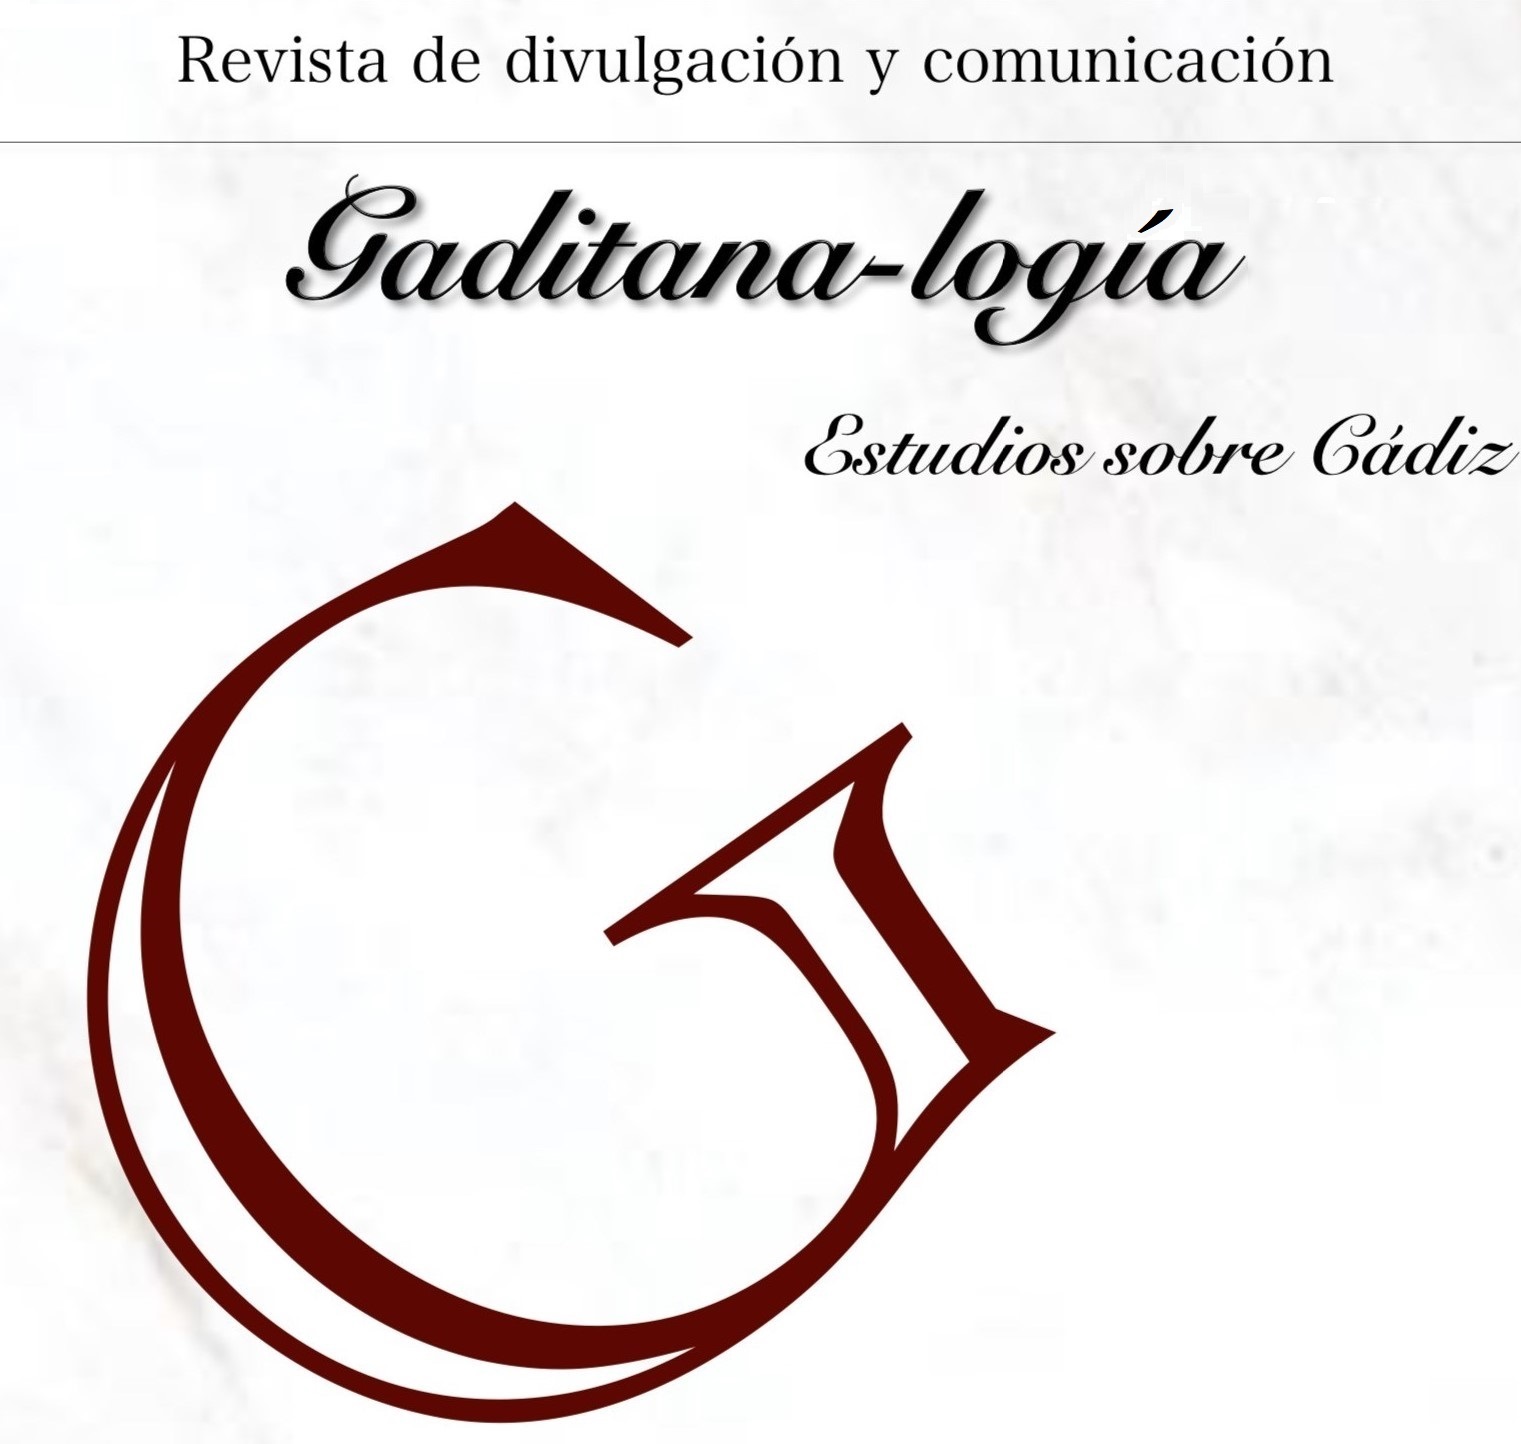 Gaditana-logía